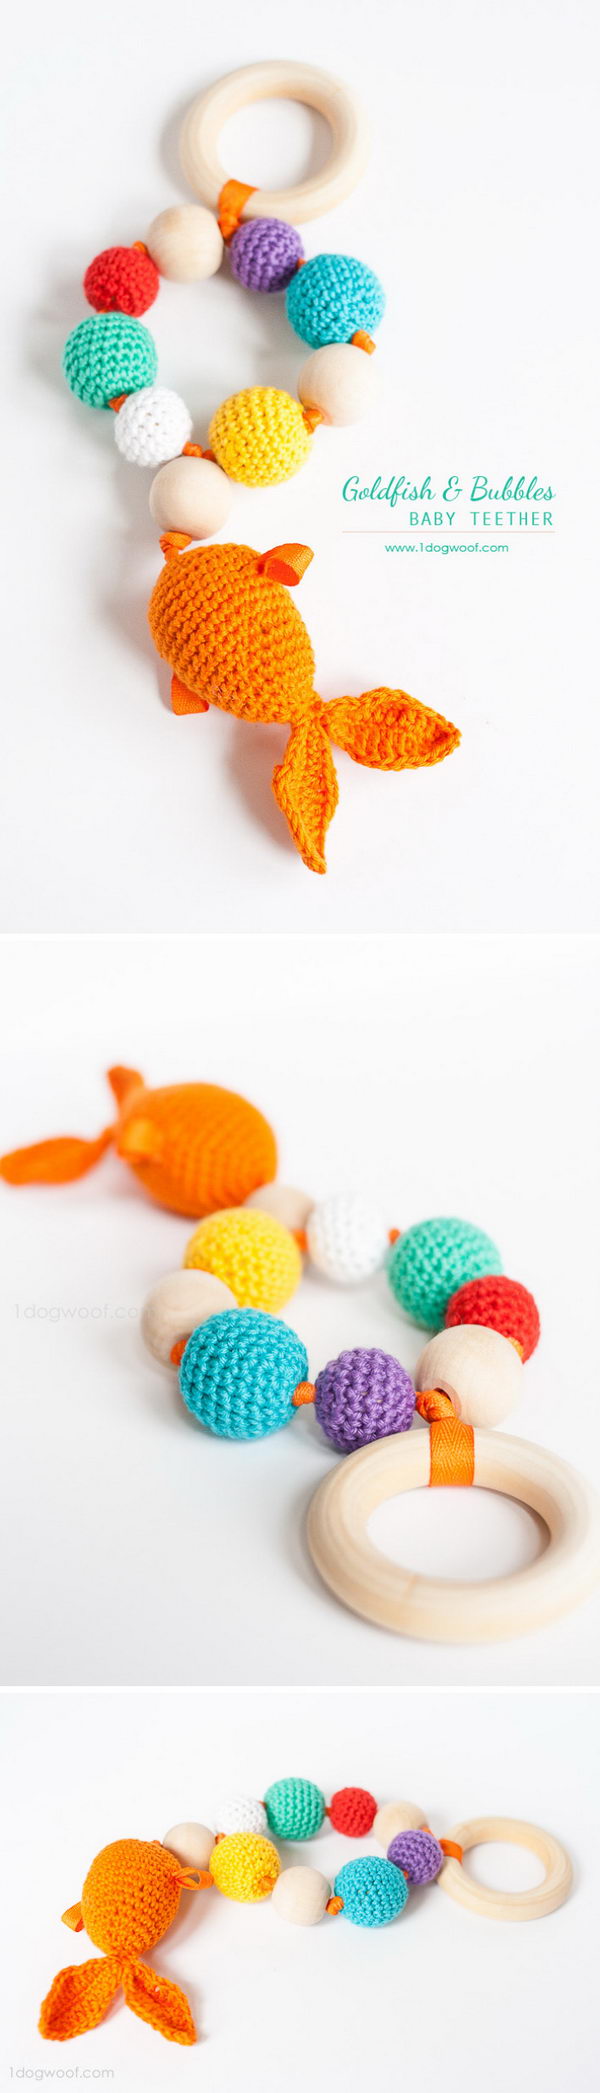 Crochet Bubbles & Goldfish Teether. 